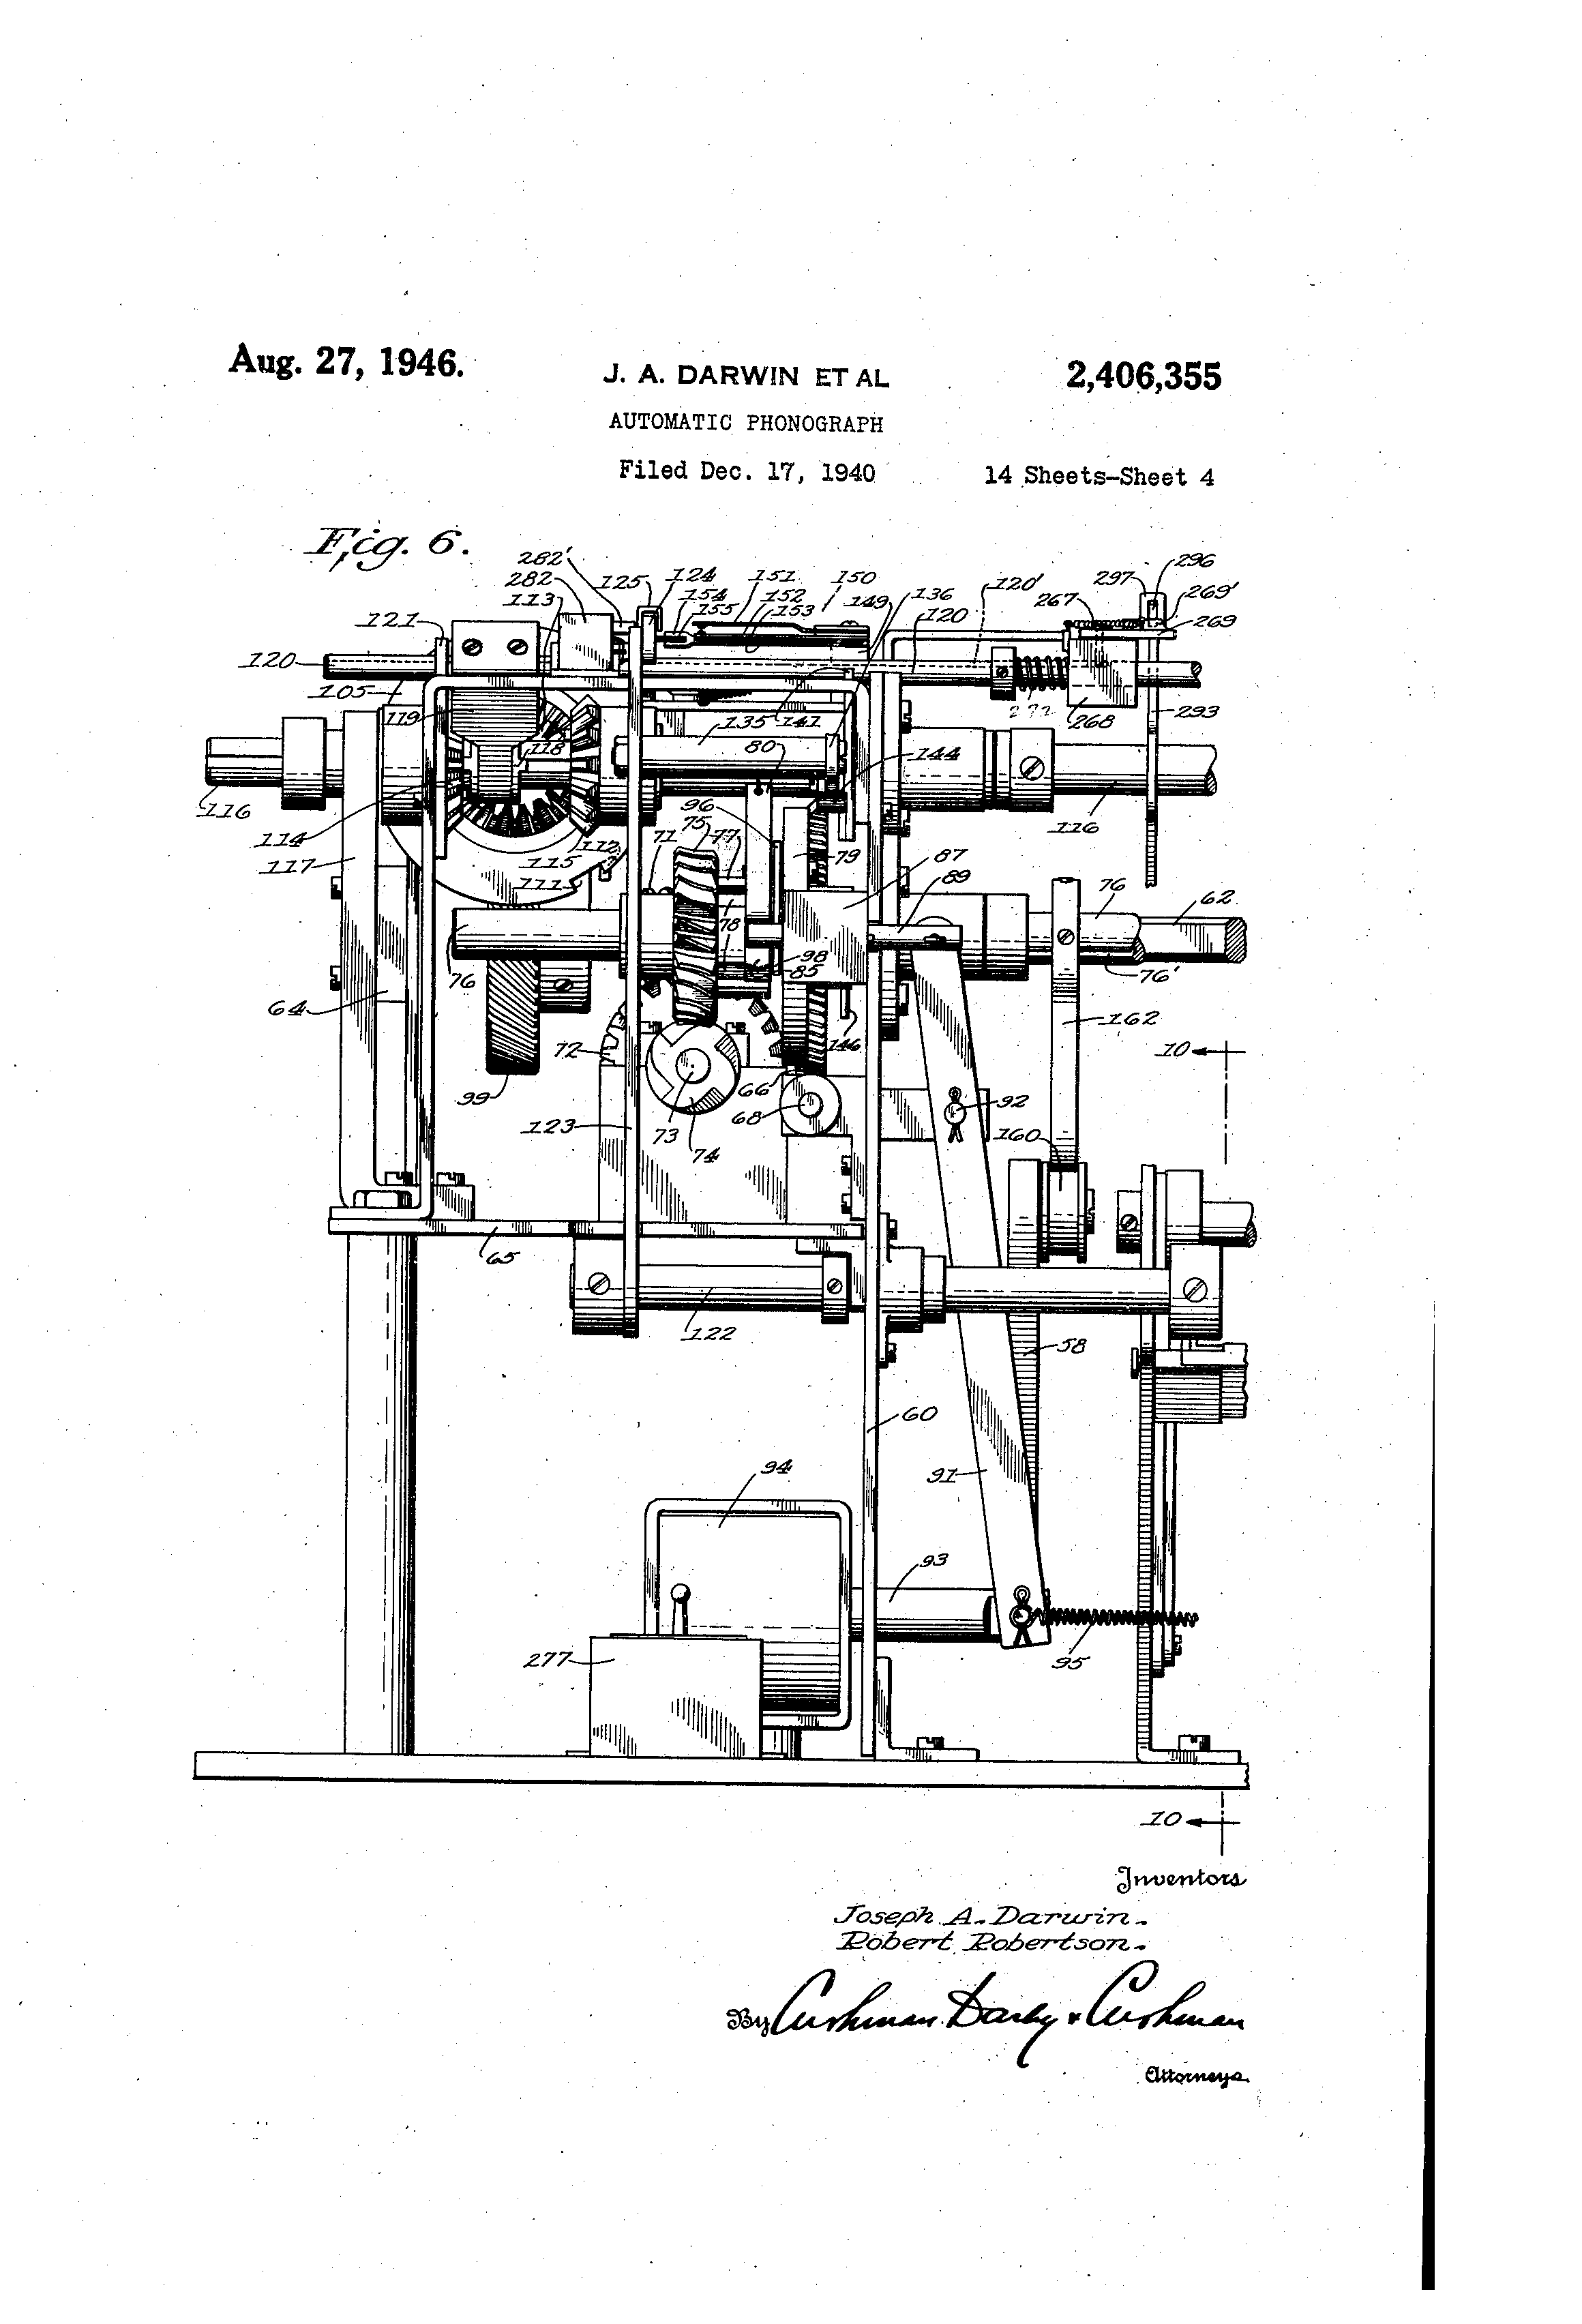 hub2b wiring diagram